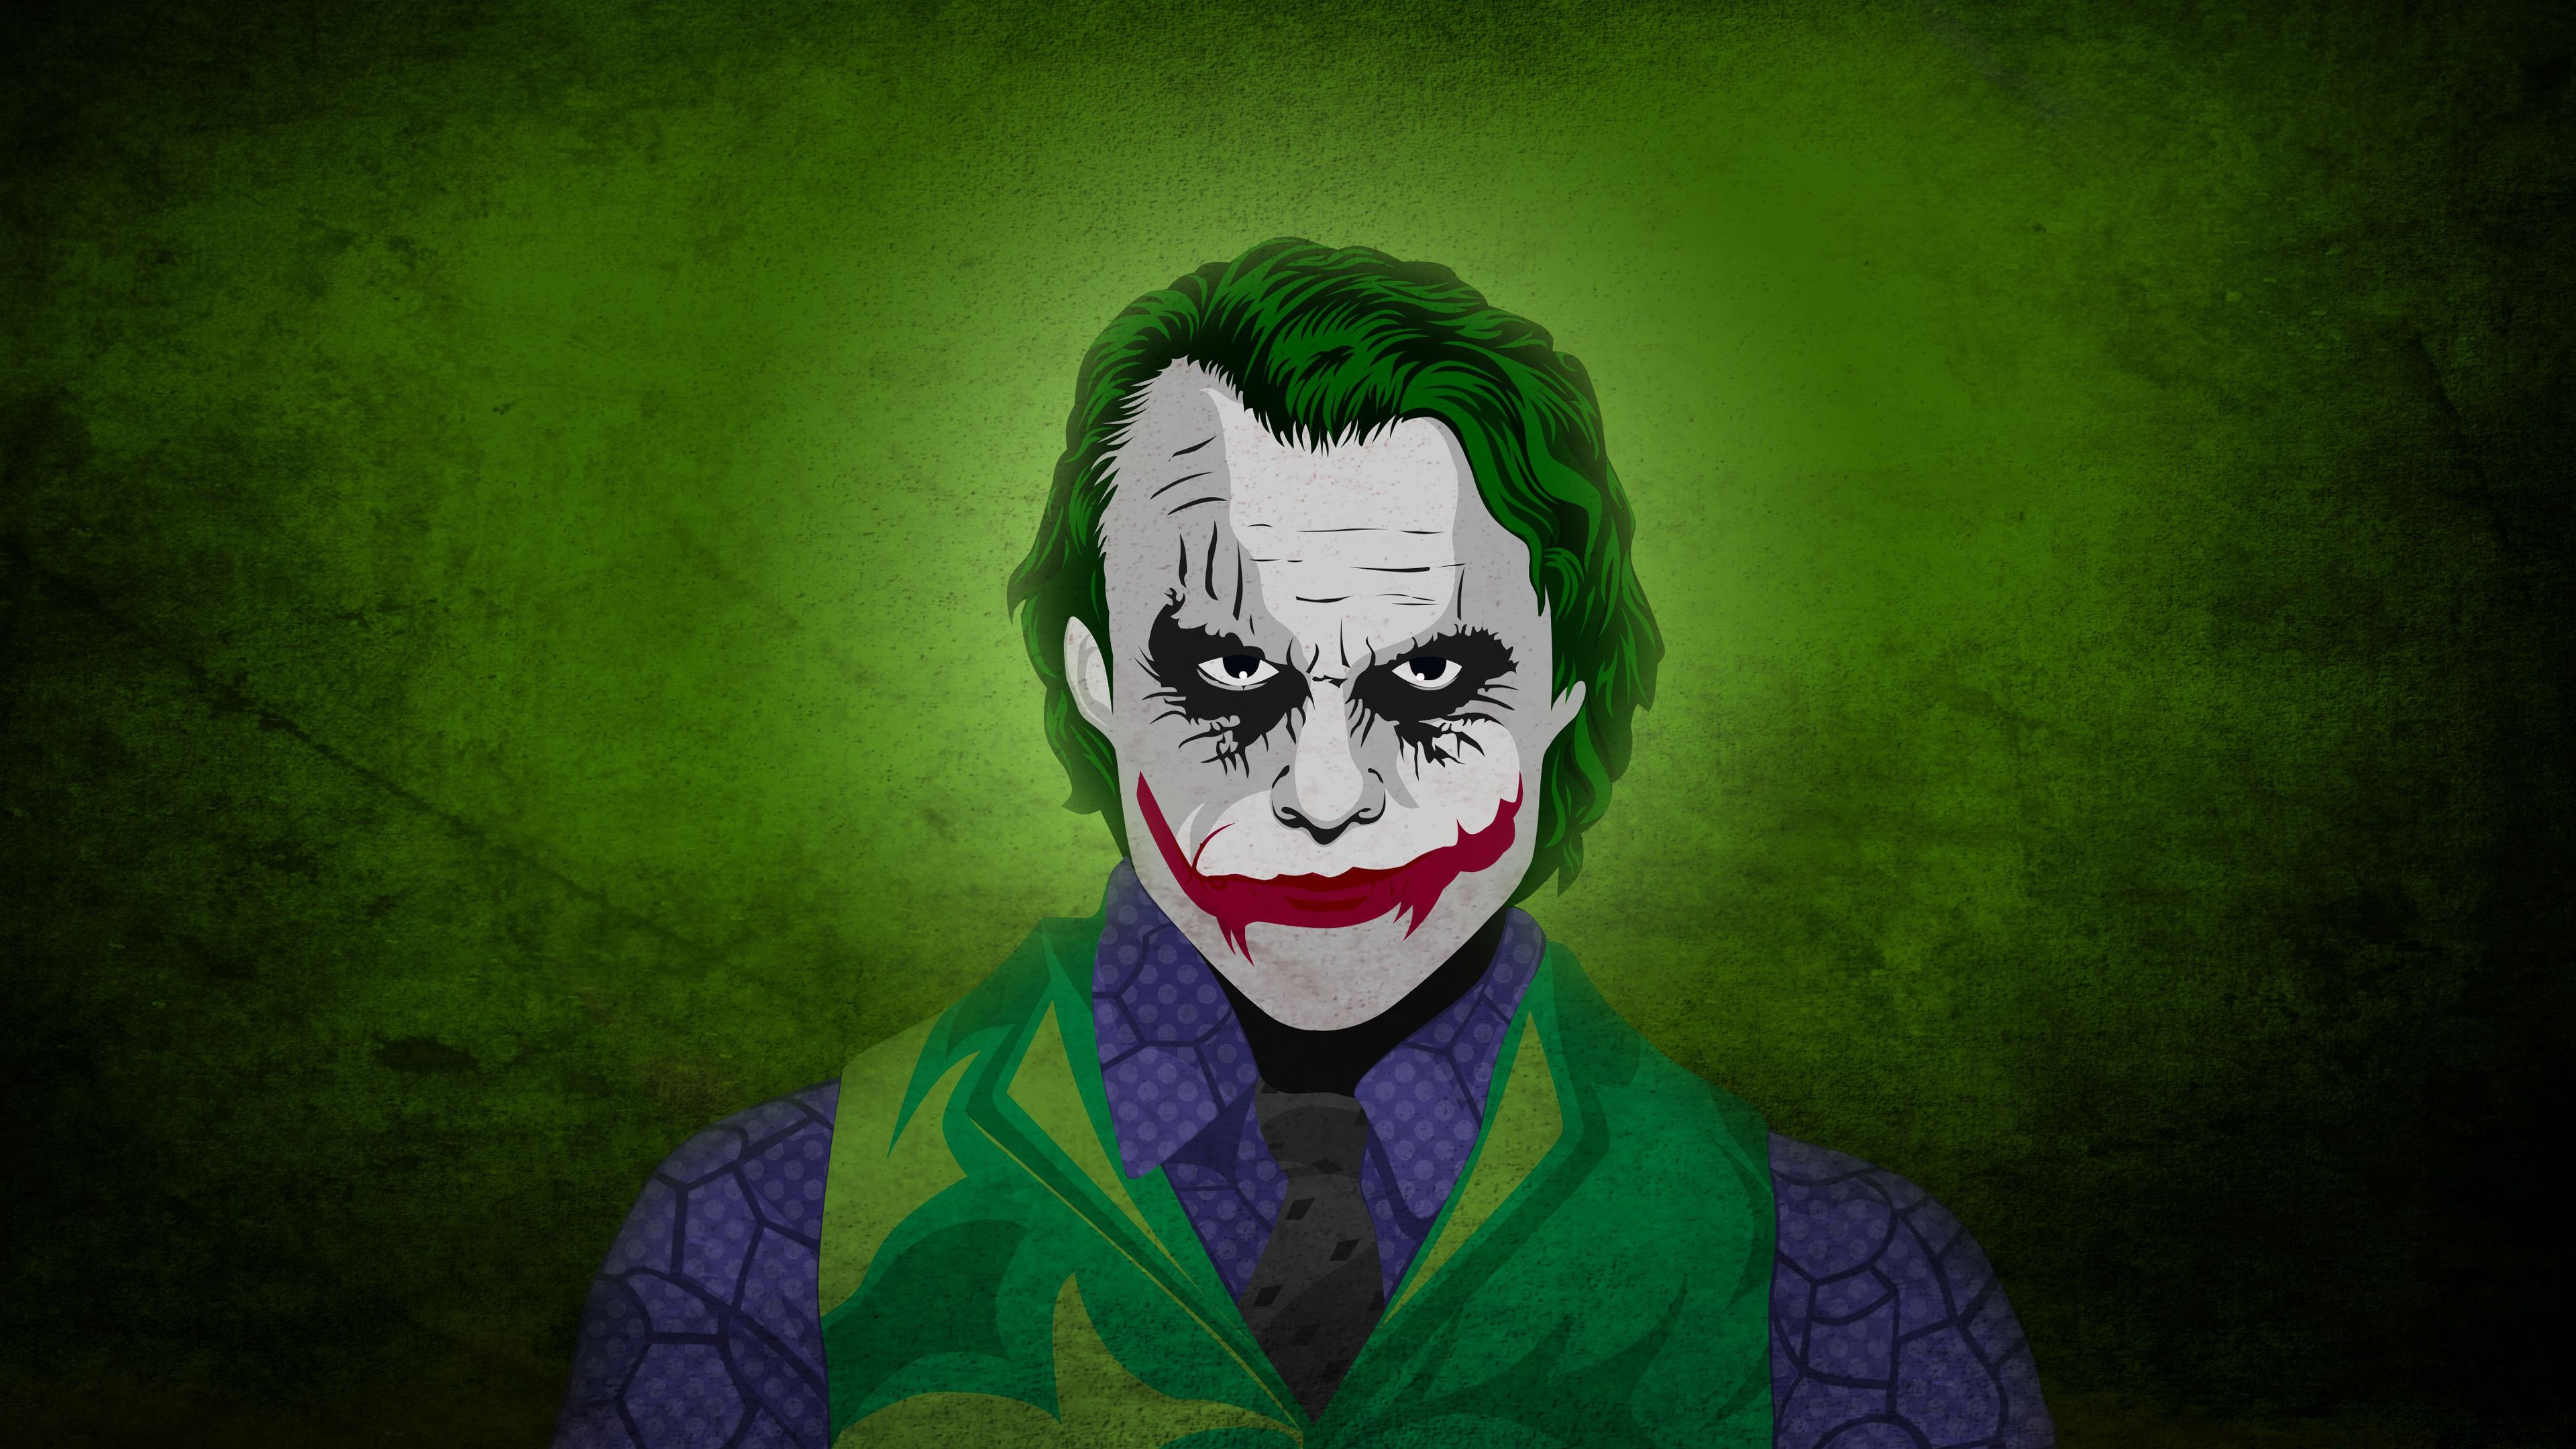 4k Joker 2020 Heath Ledger, HD Superheroes, 4k Wallpaper, Image, Background, Photo and Picture